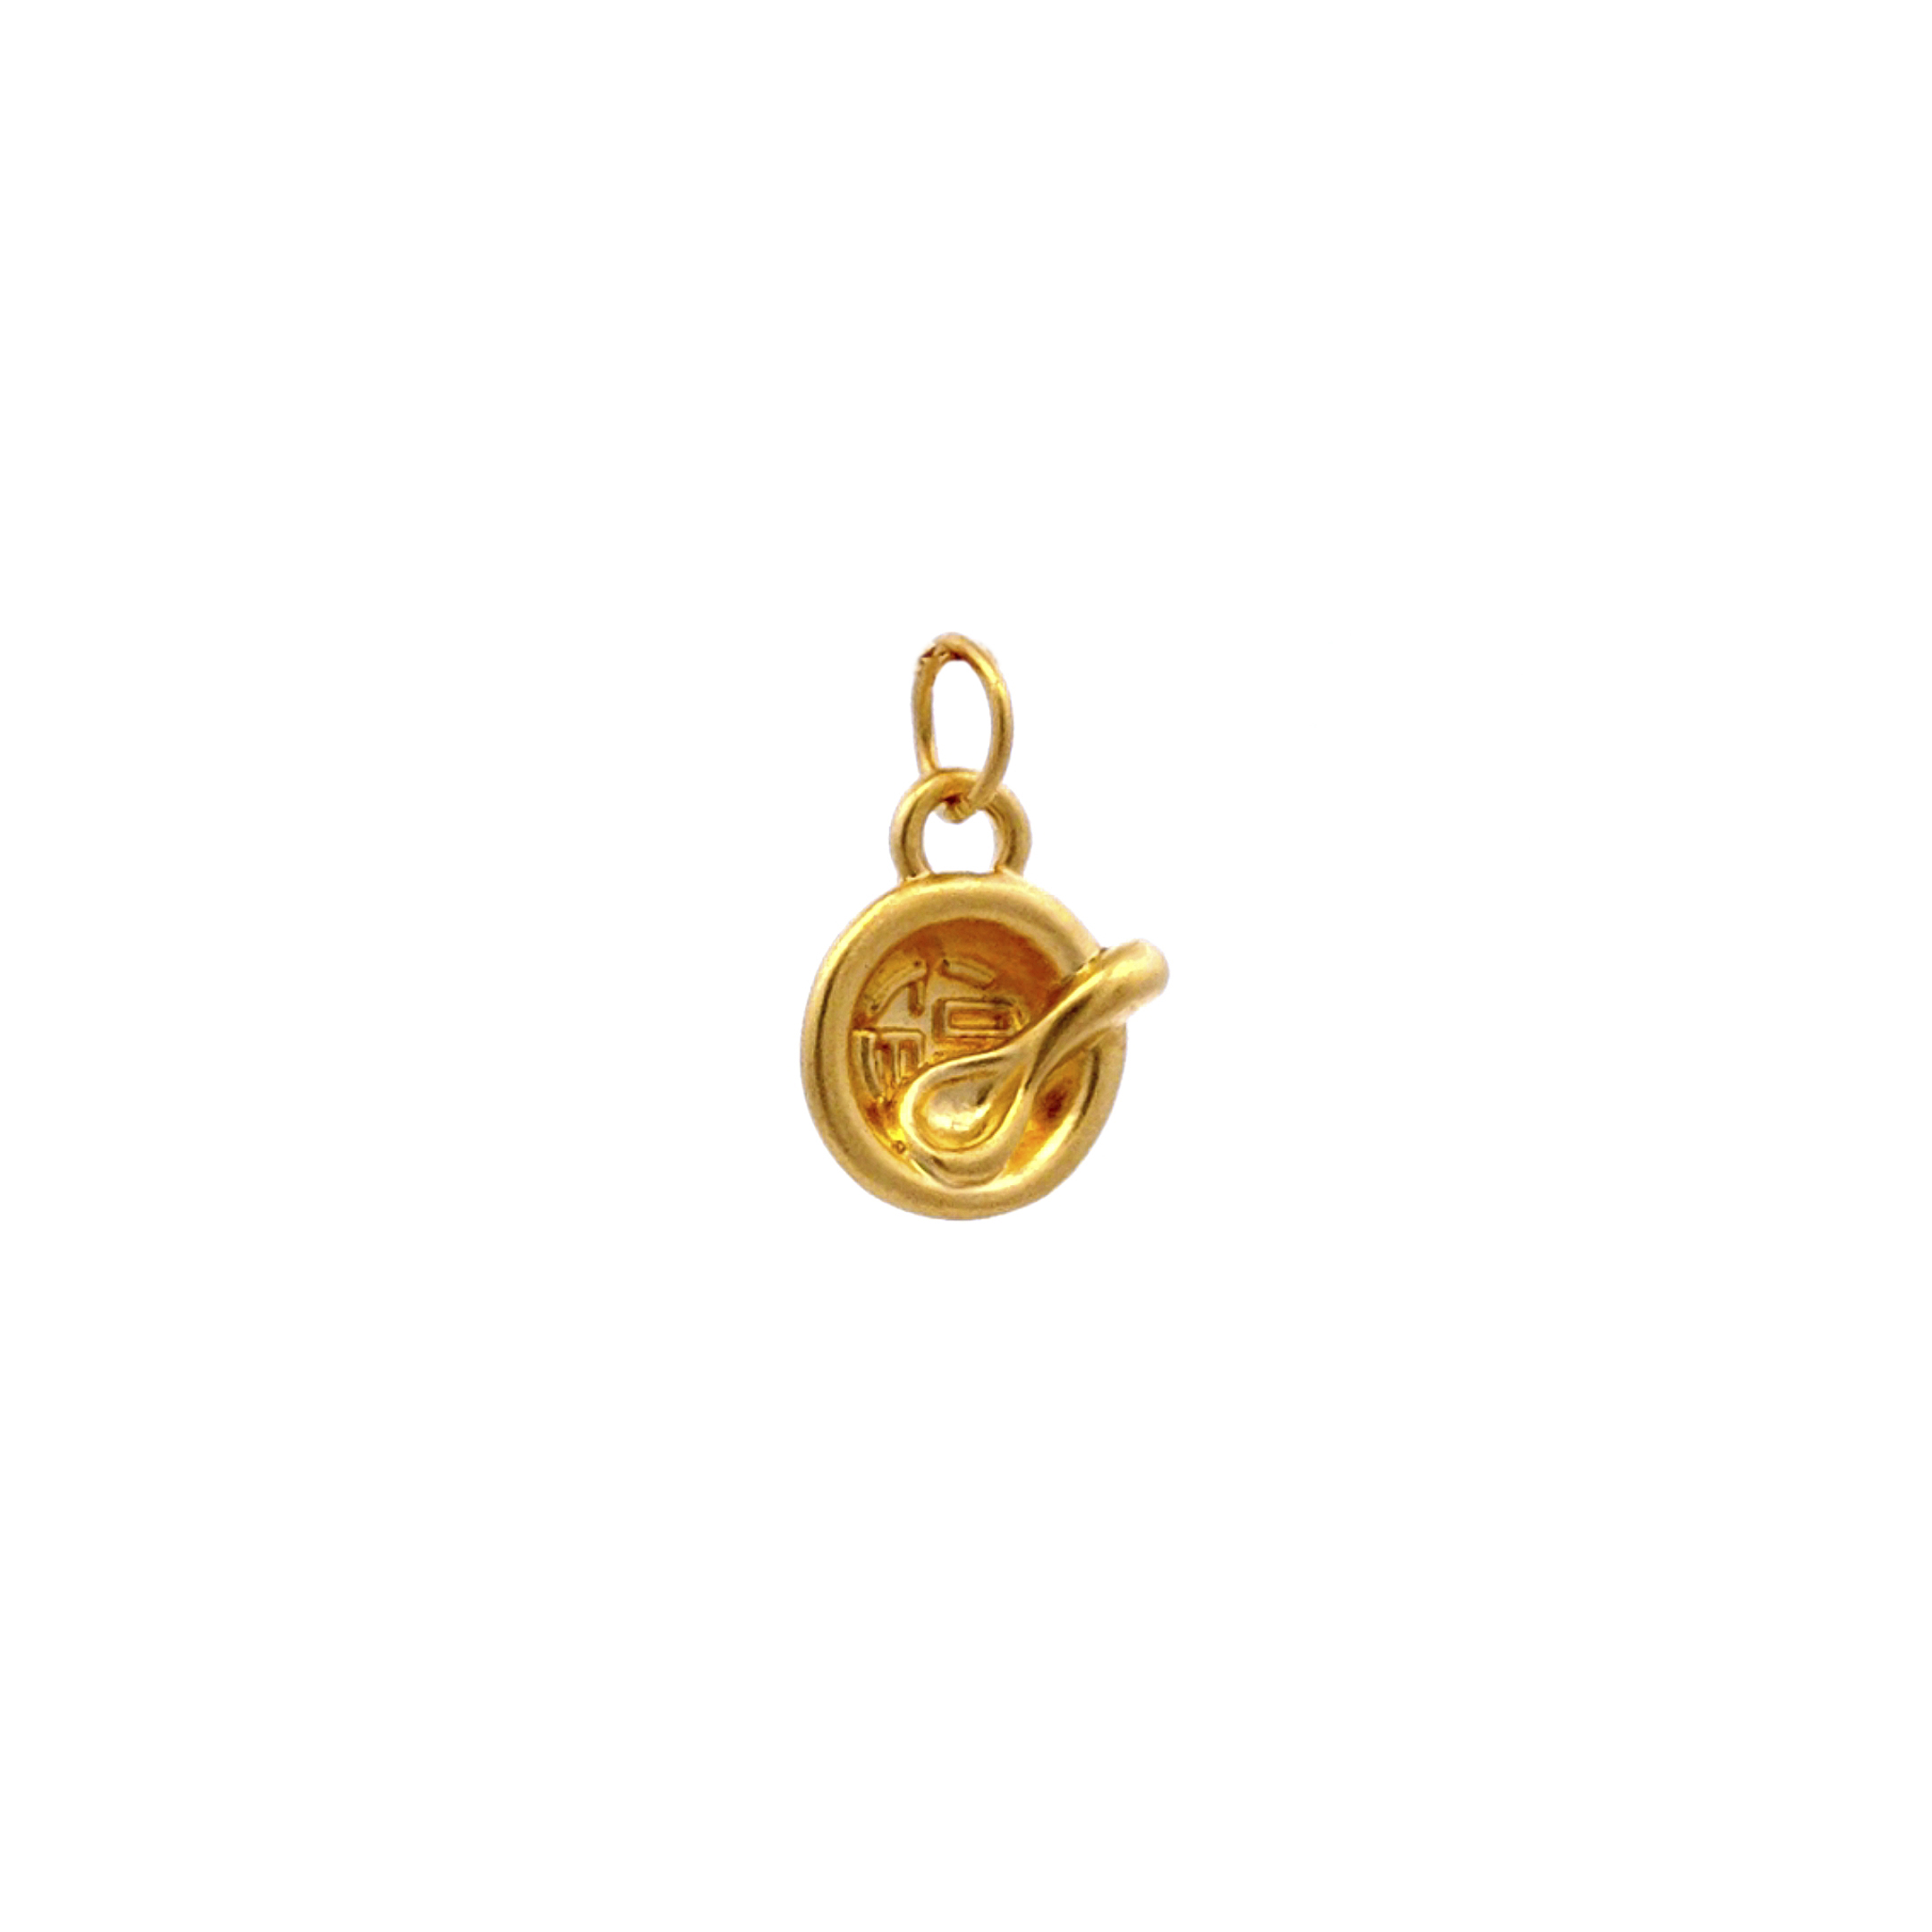 TIANSI 999 (24K) Gold Fortune Spoon Golden Bowl Pendant